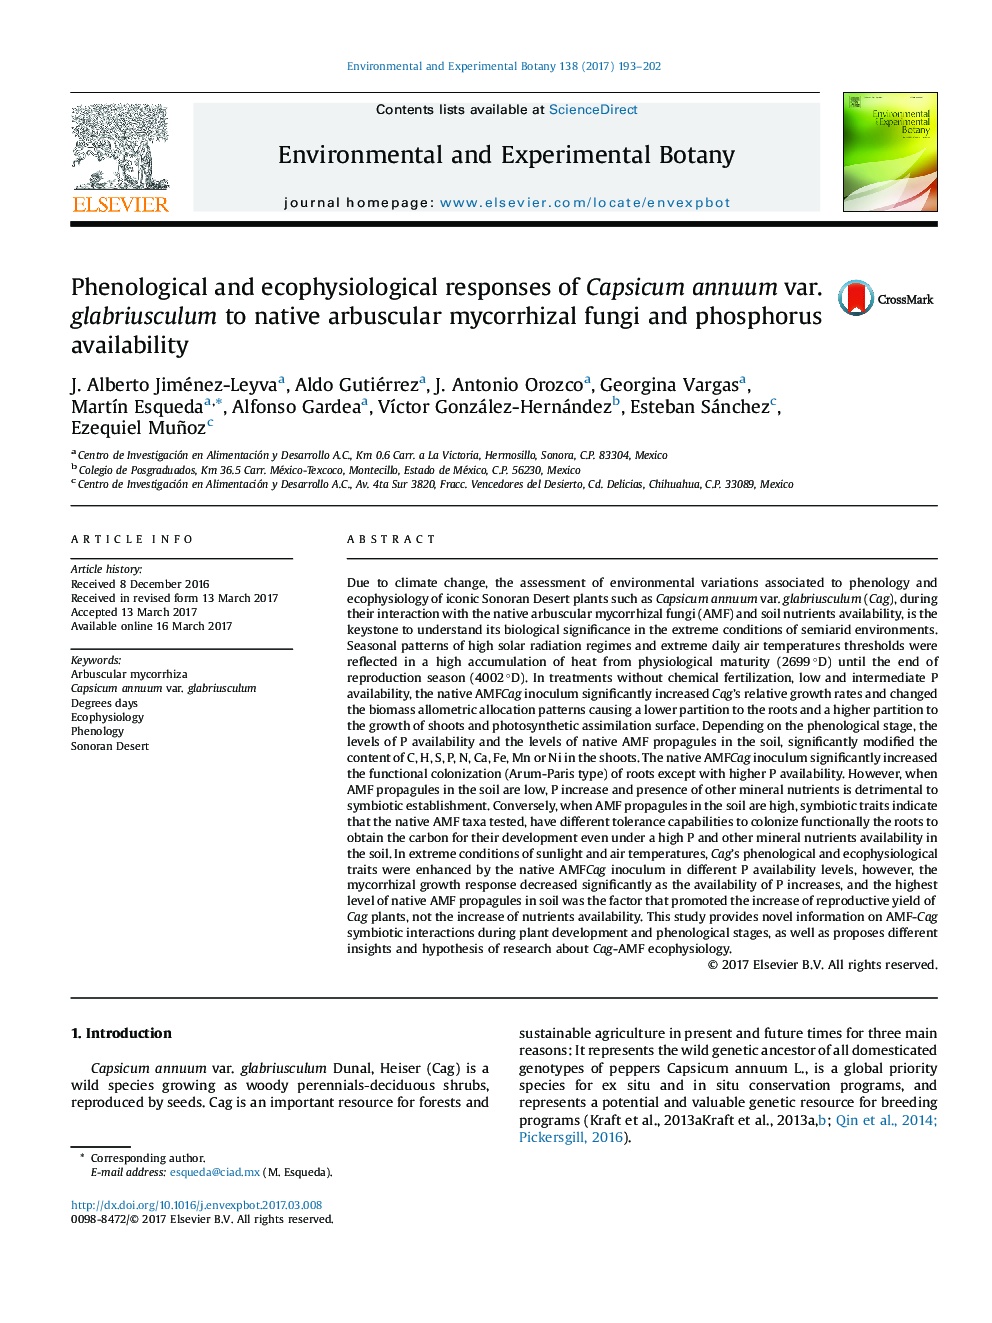 Phenological and ecophysiological responses of Capsicum annuum var. glabriusculum to native arbuscular mycorrhizal fungi and phosphorus availability